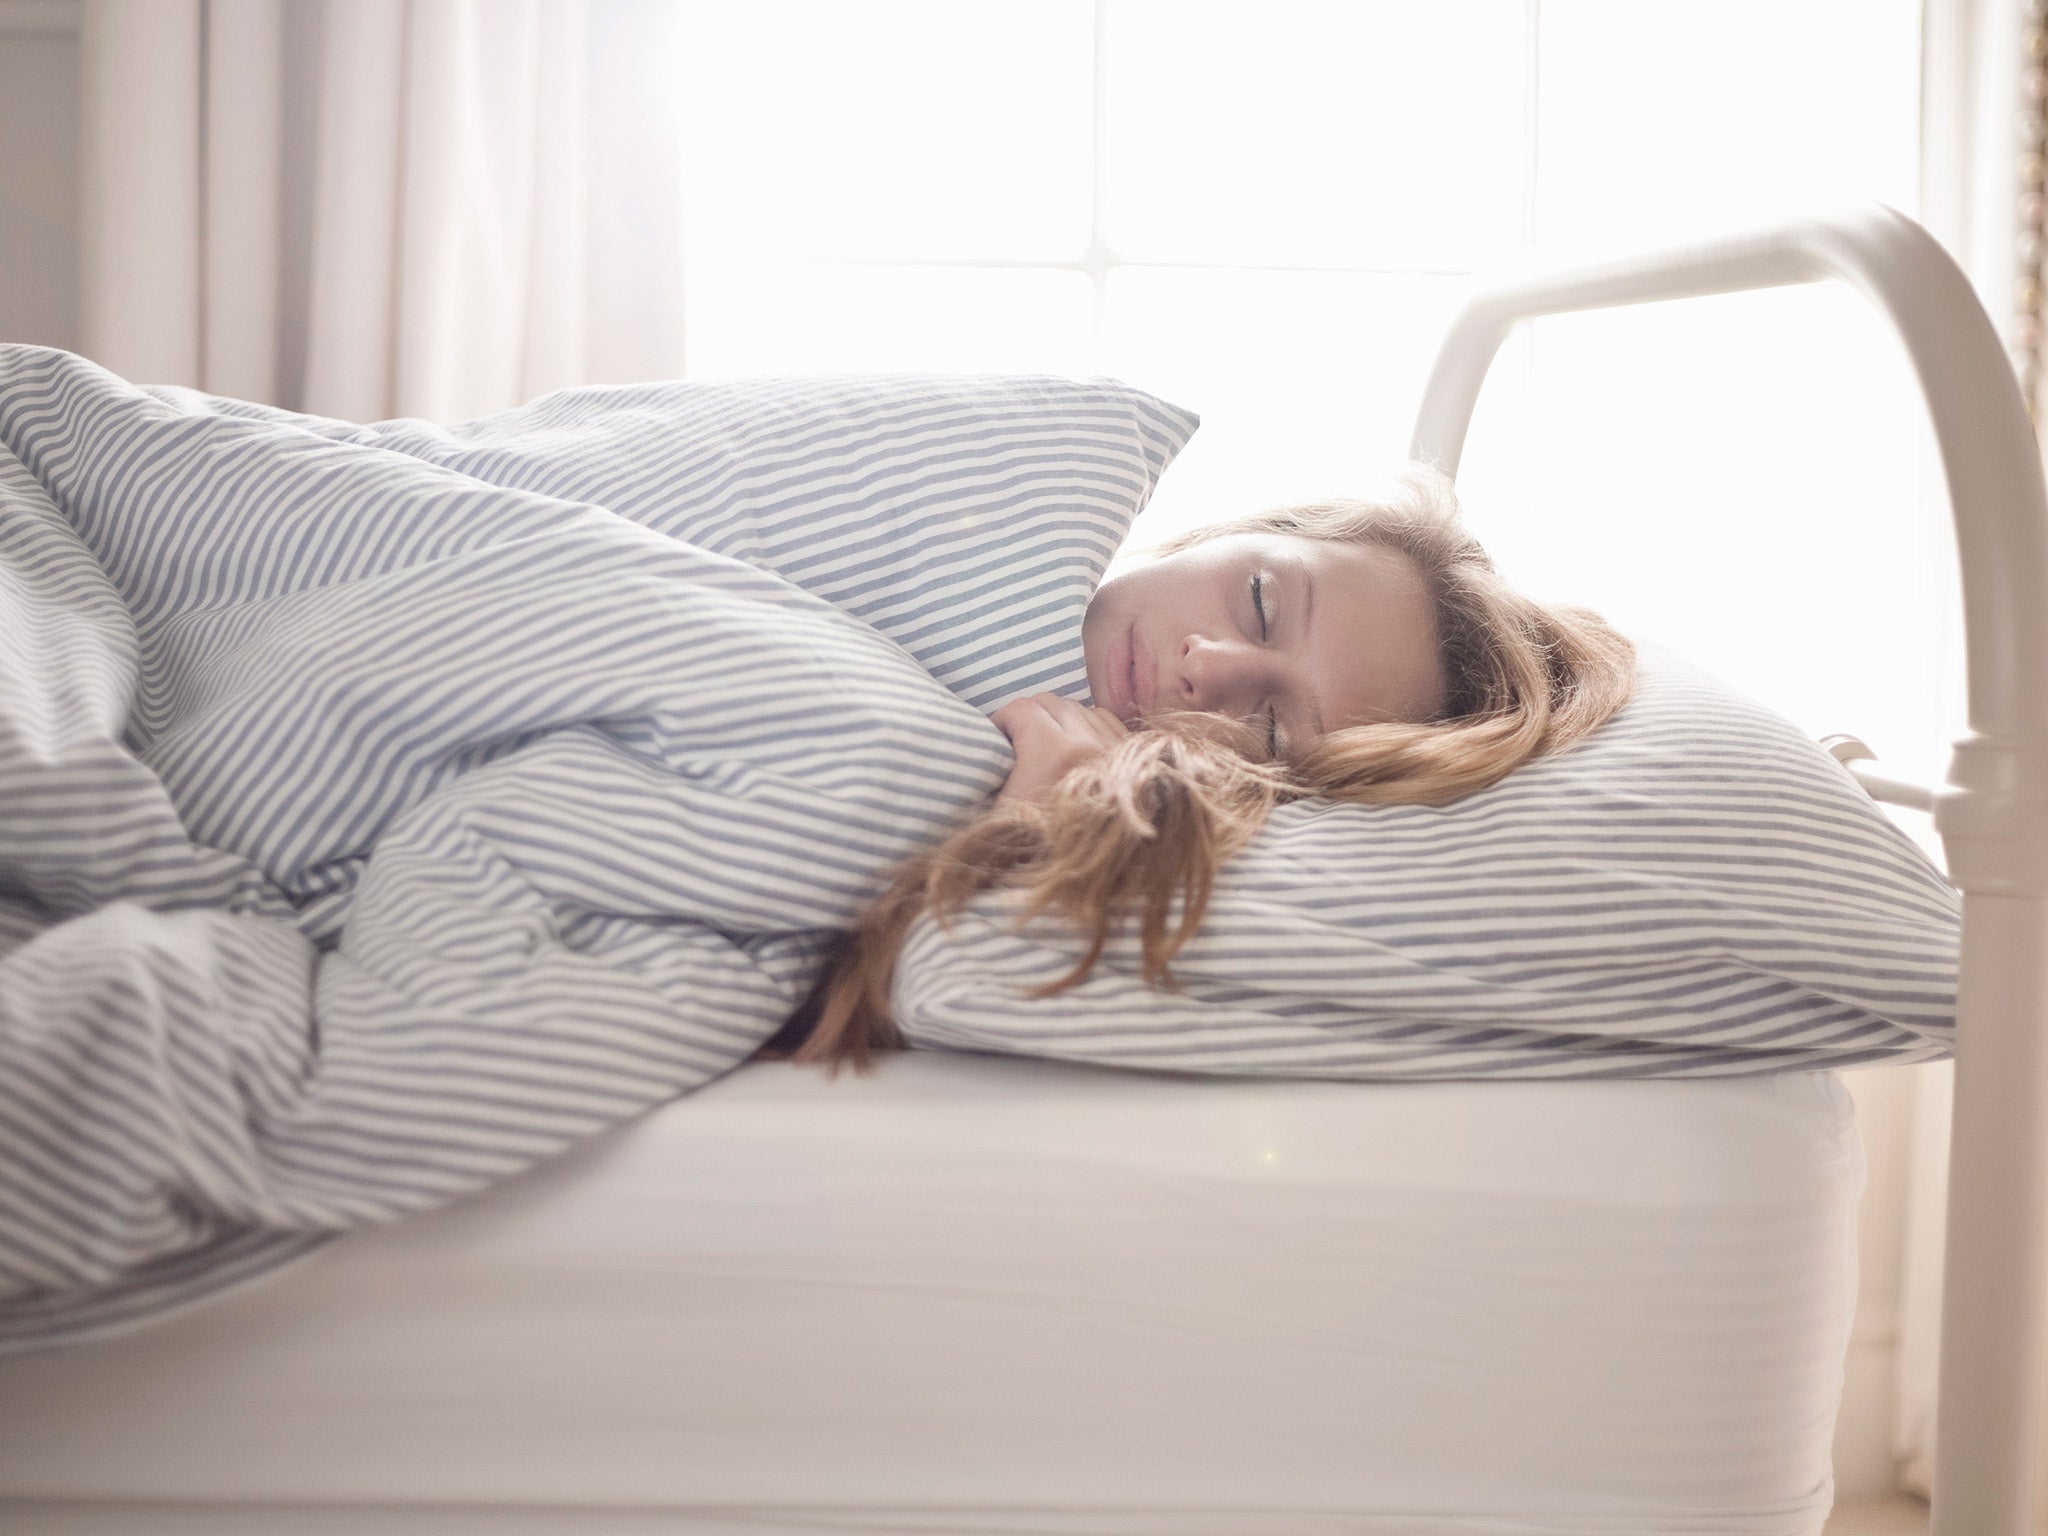 Not drinking alcohol before bed increases likelihood of REM sleep